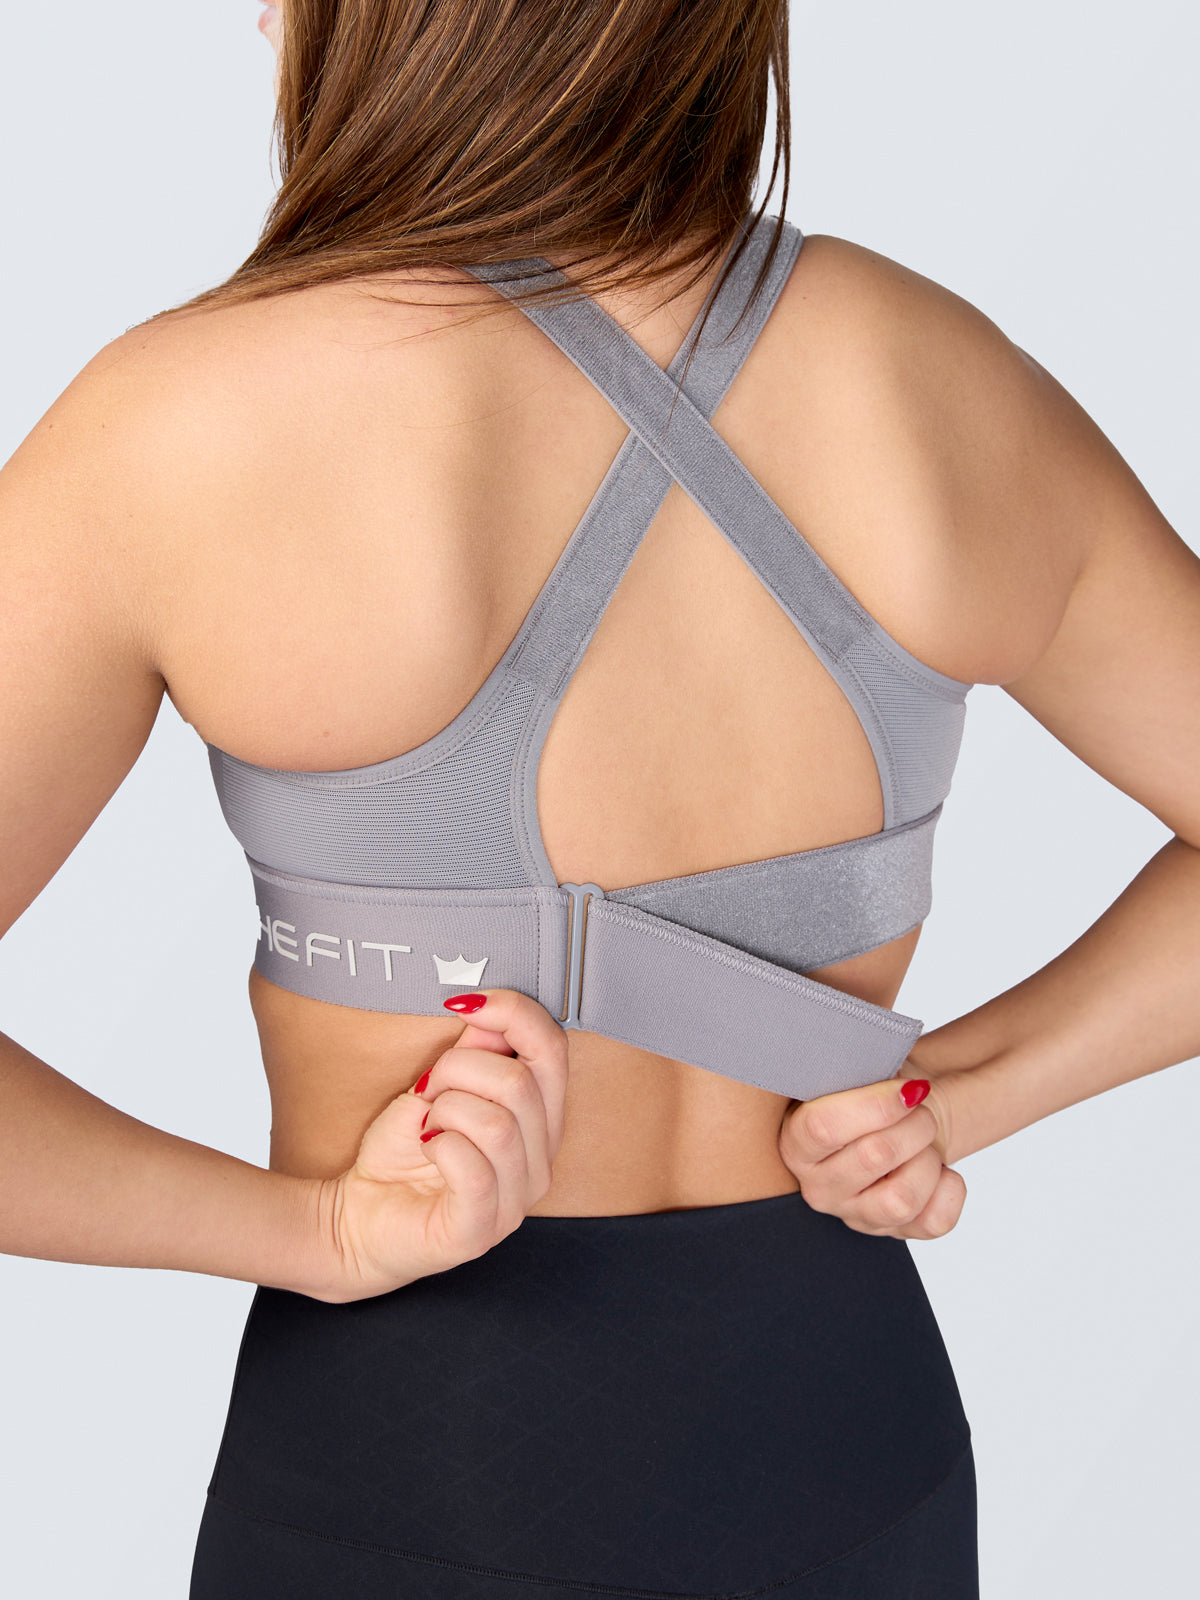 SheFit Ultimate Sports Bra - BEST For Large Chests  Sports bra design, Bras  best, Maternity activewear